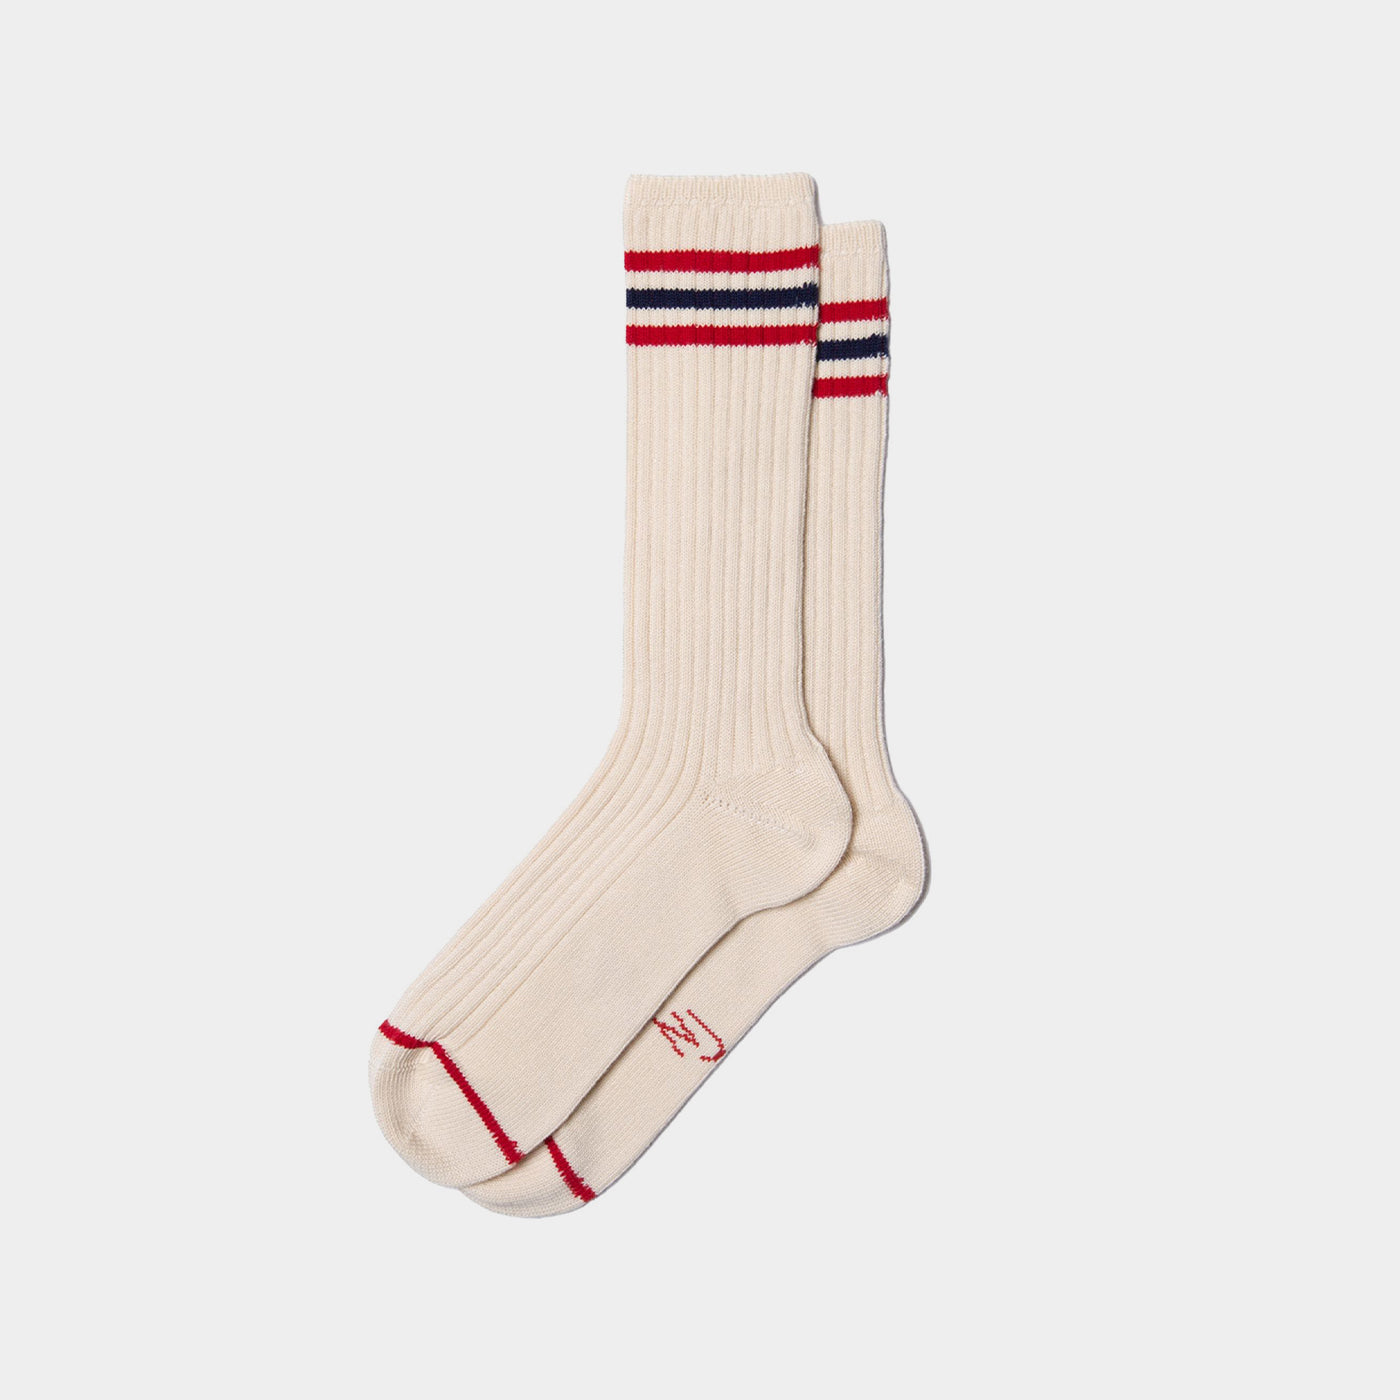 Nudie - Mens Retro Tennis Socks - Off-White / Red